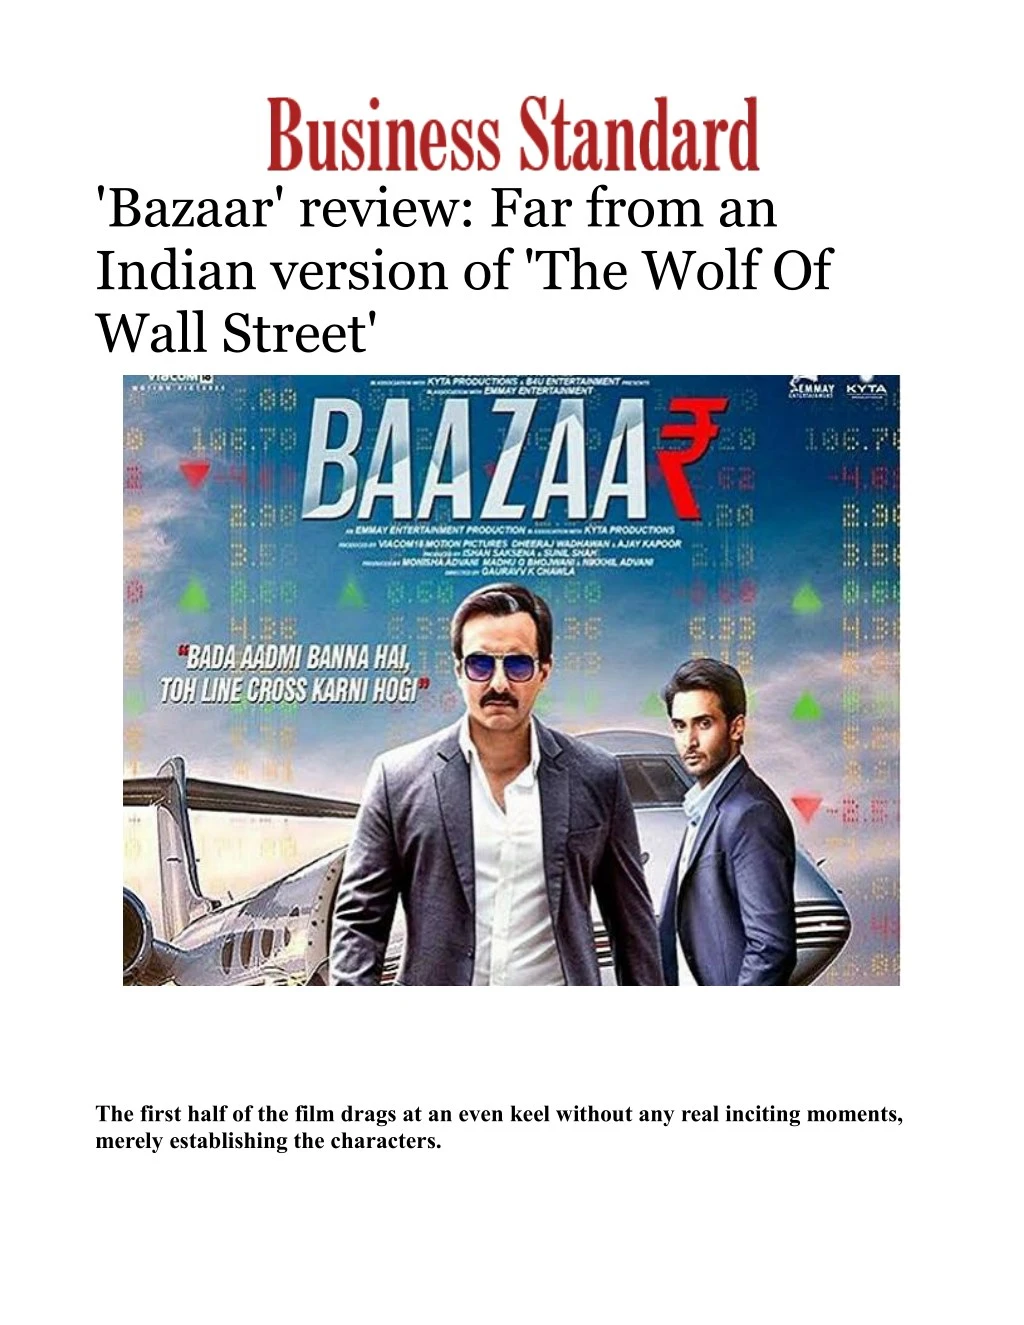 bazaar review far from an indian version